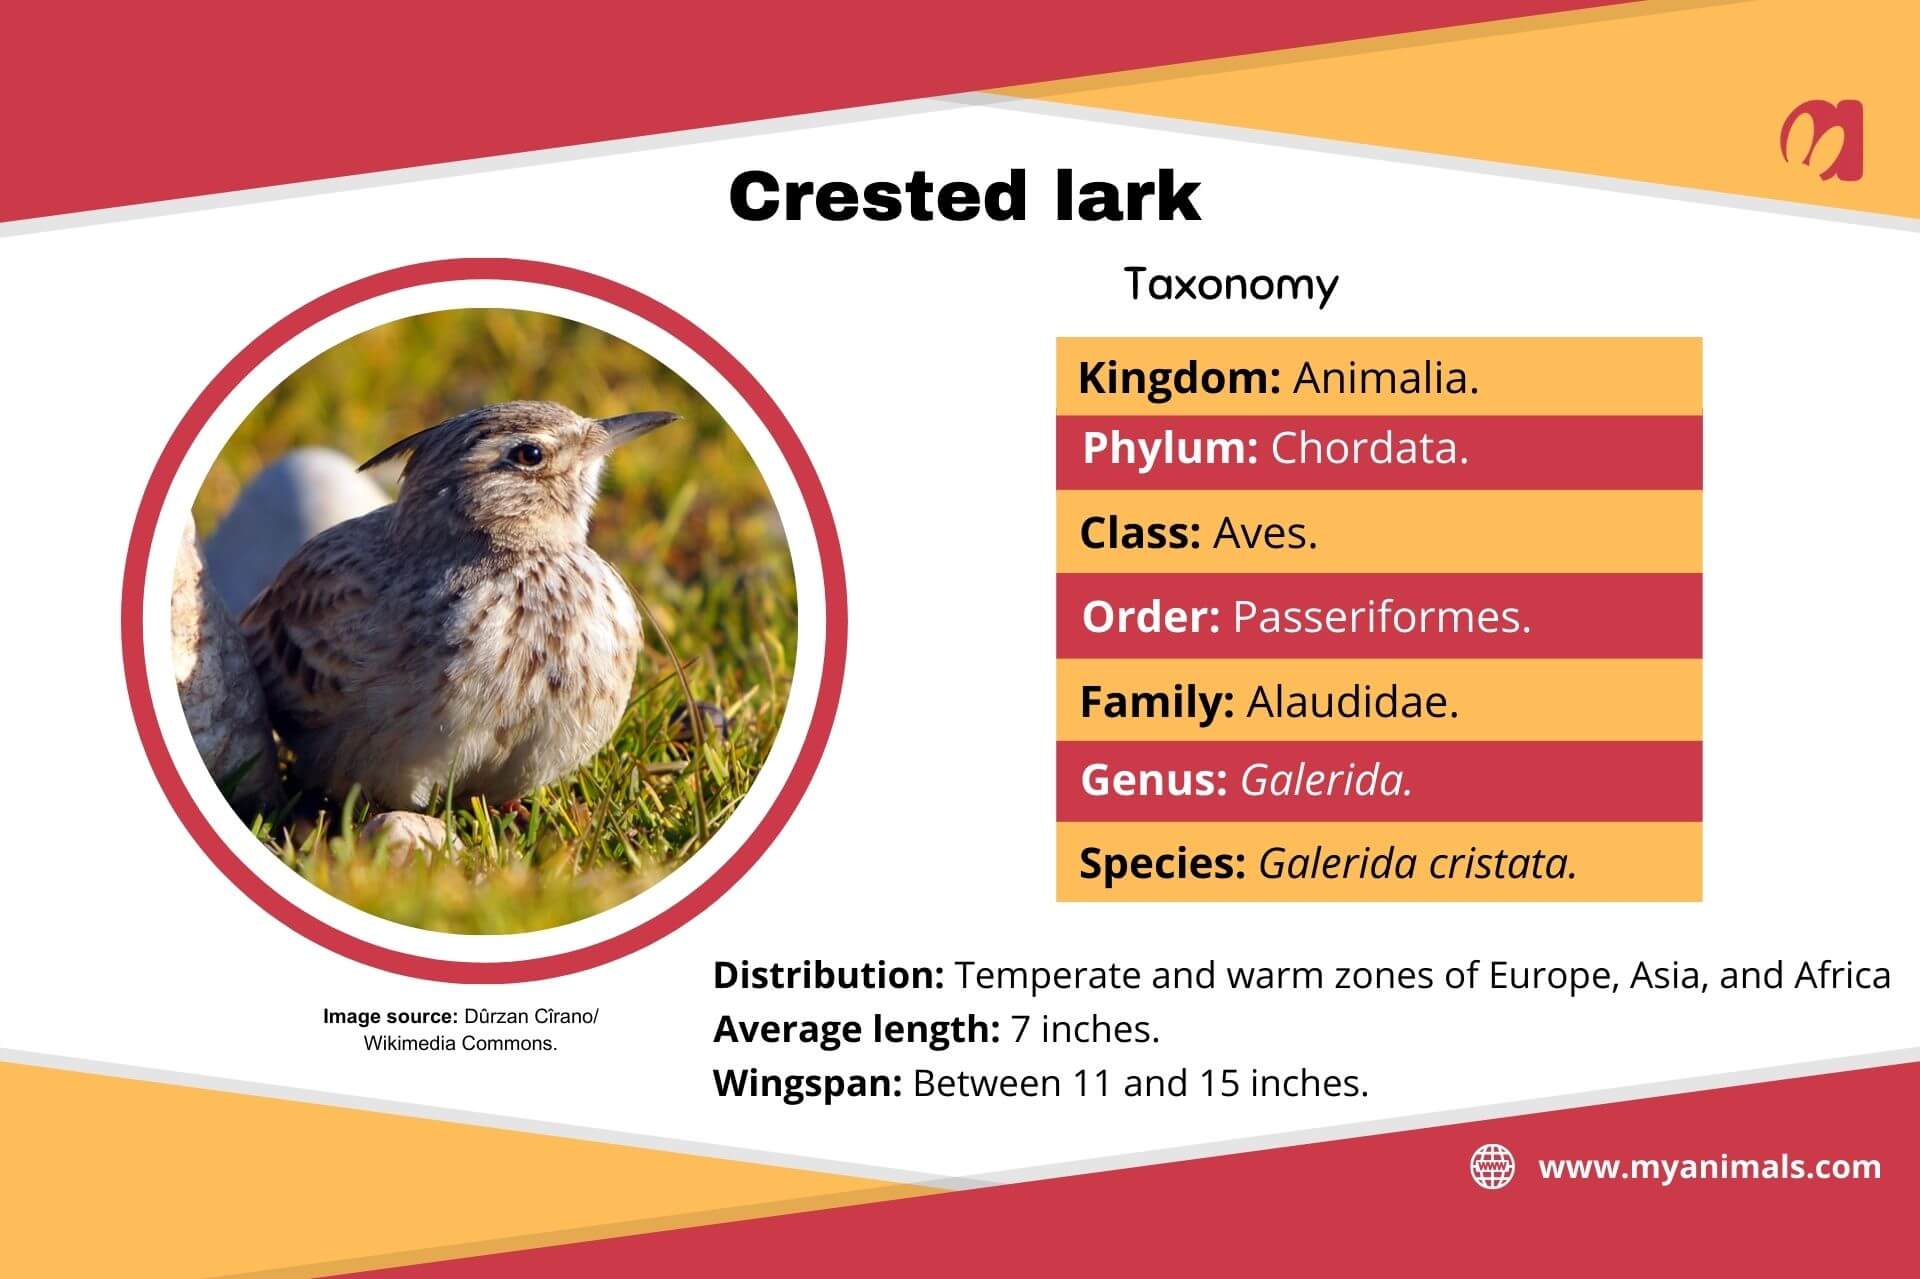 Information on the crested lark.